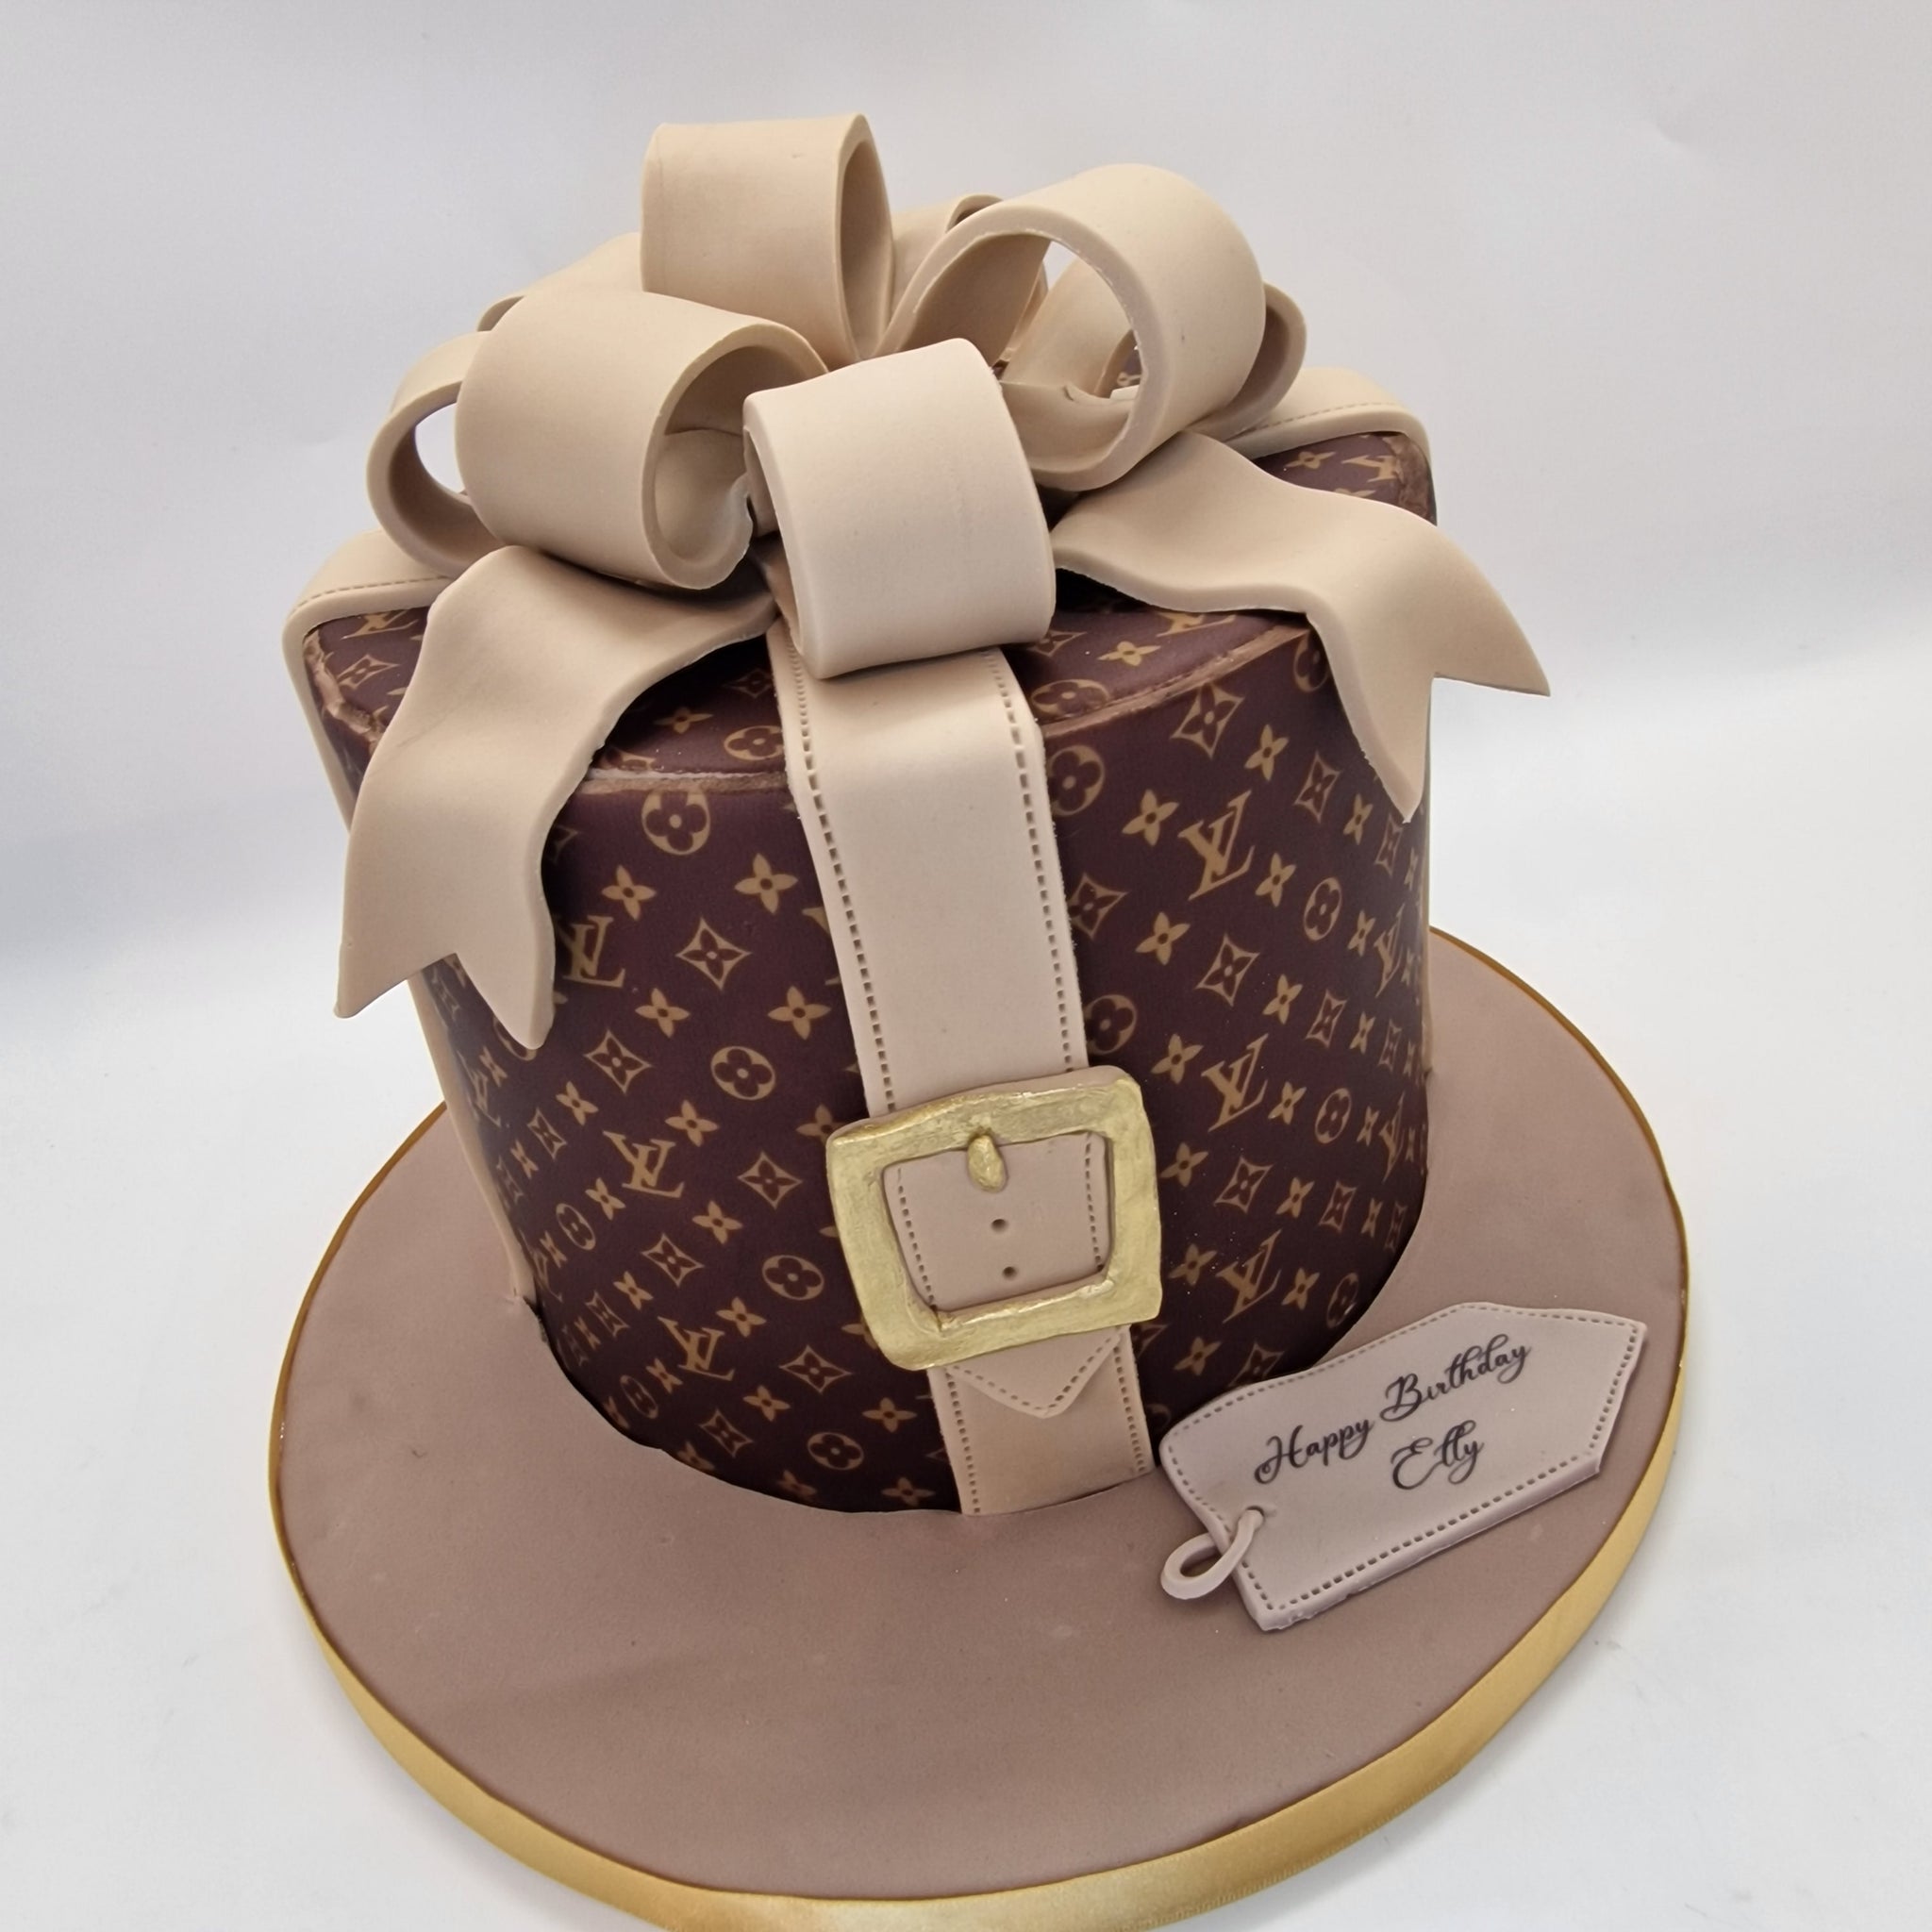 Louis Vuitton Cake  Louis vuitton cake, Cute birthday cakes